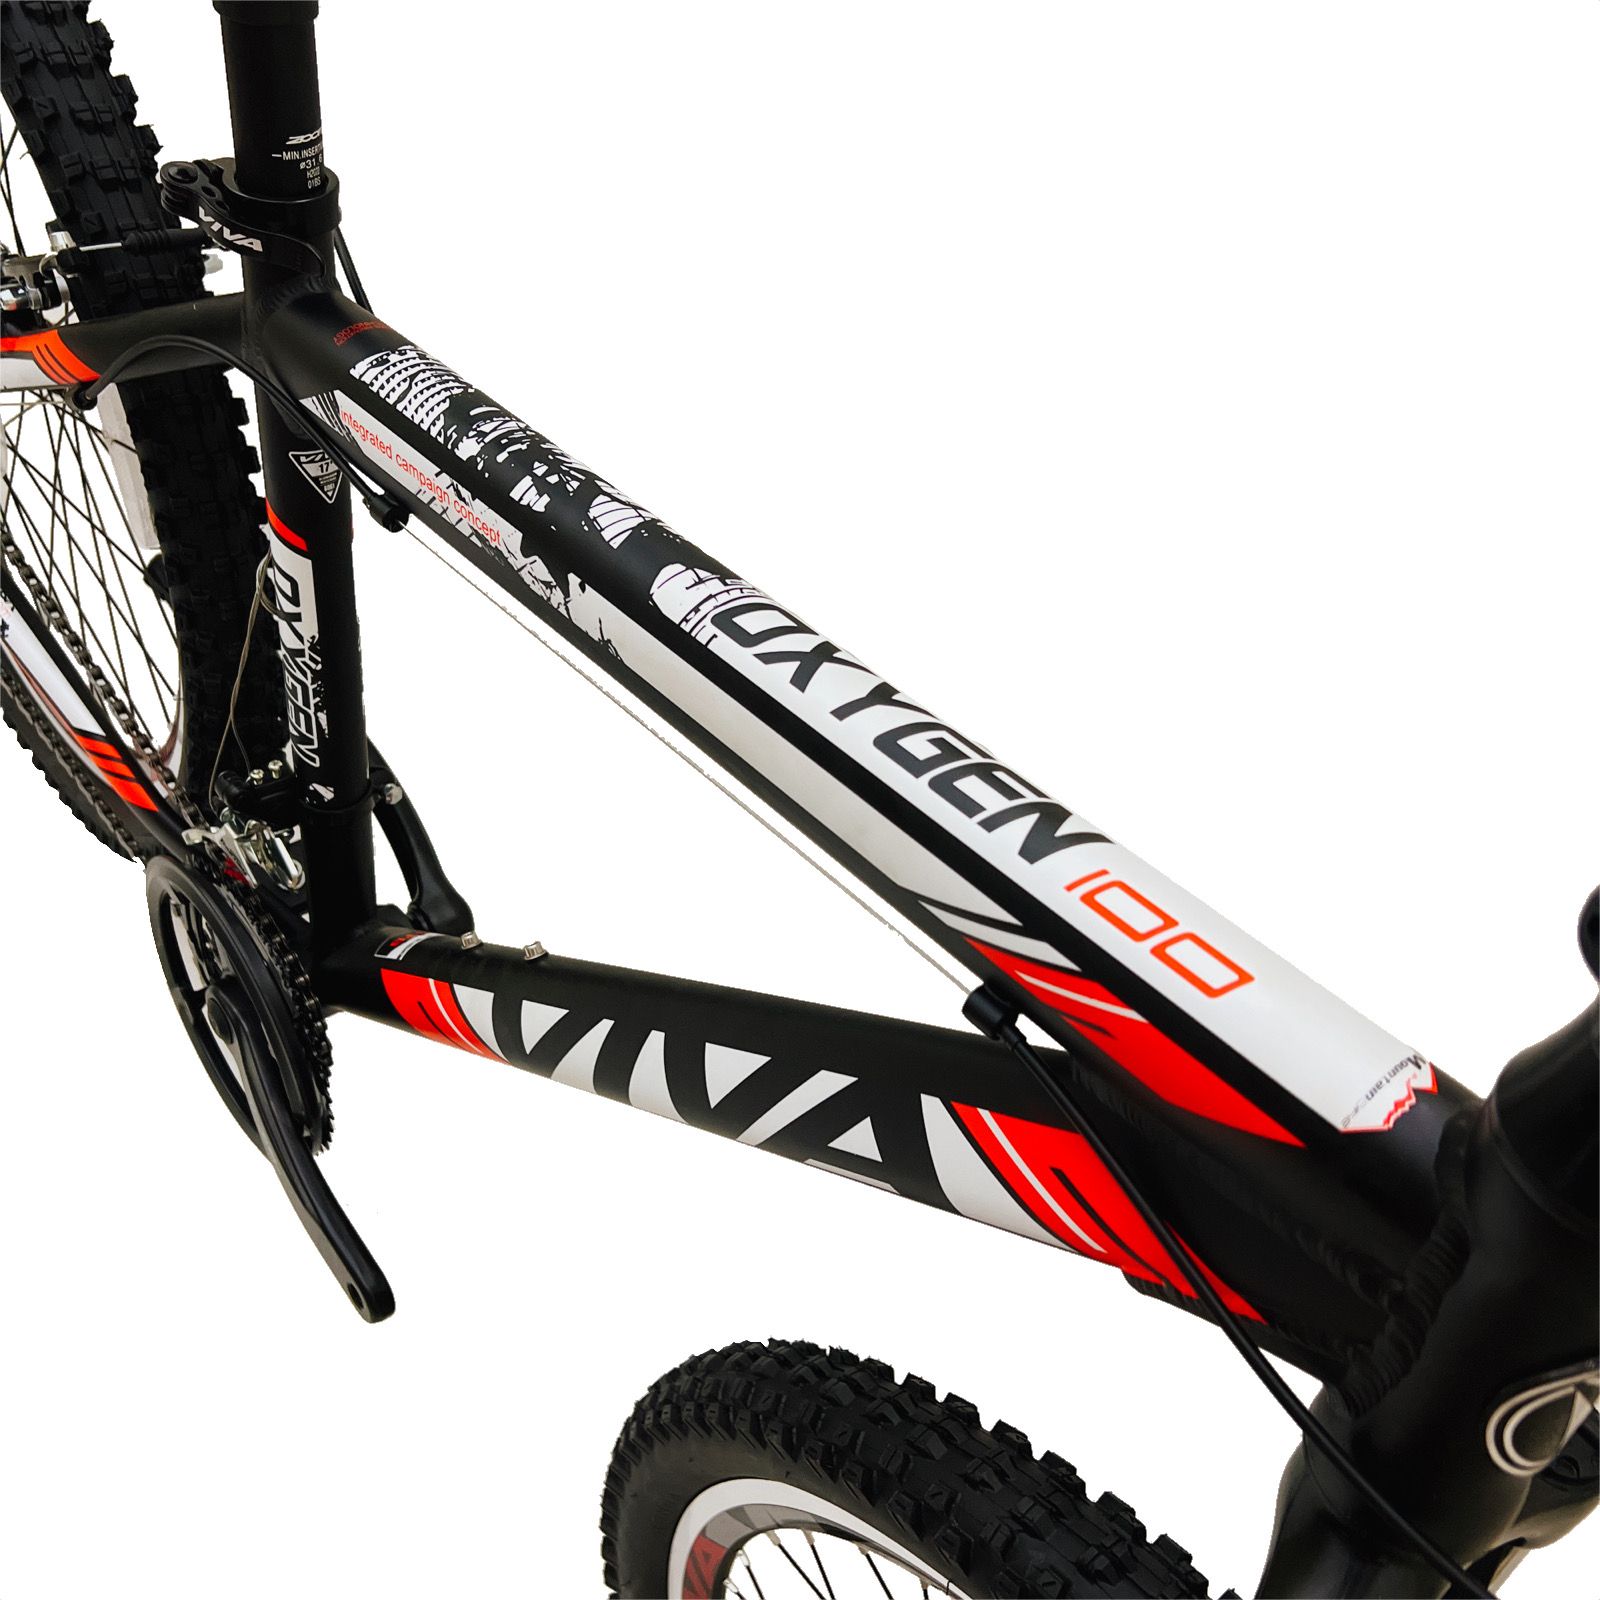 دوچرخه کوهستان ویوا مدل OXYGEN کد 100 سایز 26 -  - 11